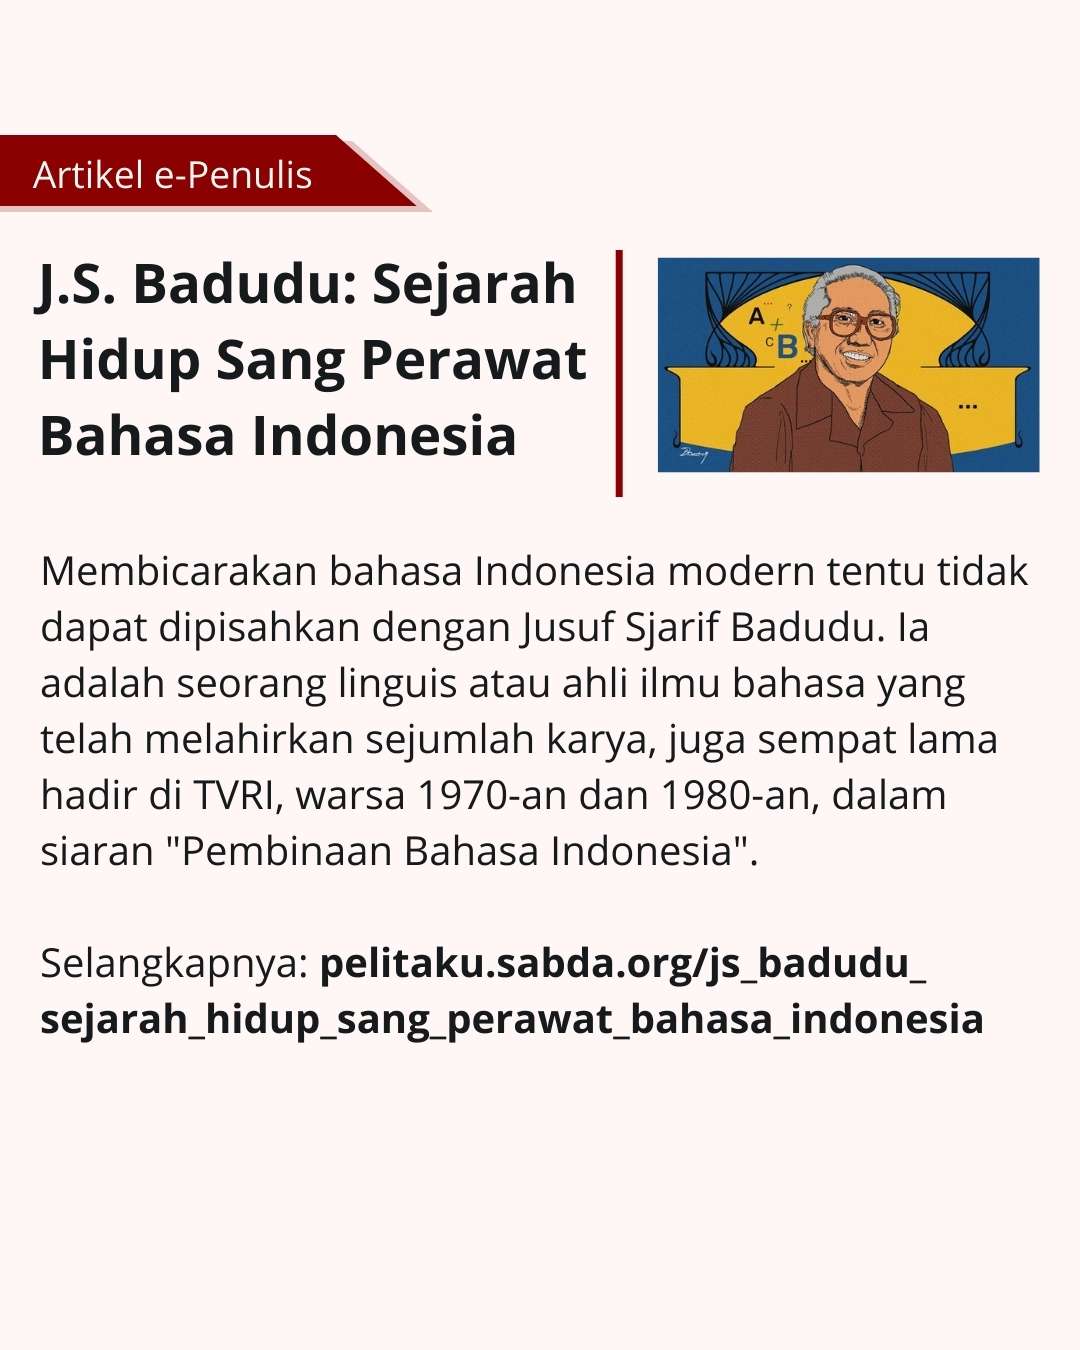 Mengenal J.S. Badudu, ahli ilmu bahasa Indonesia.